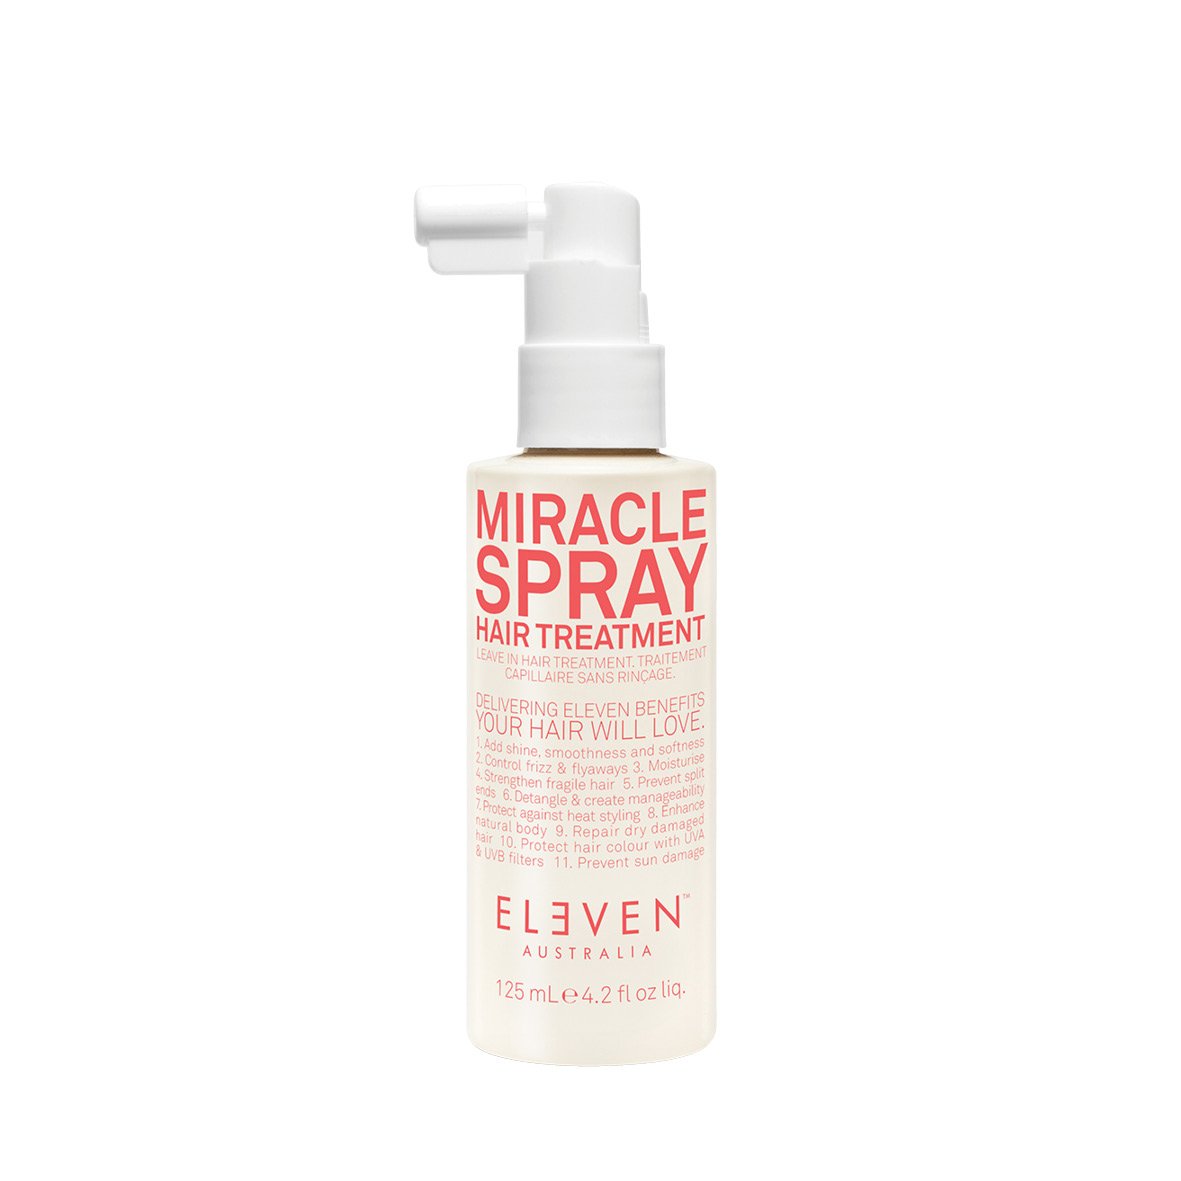 ELEVEN Australia Miracle Spray 125 ml.jpg